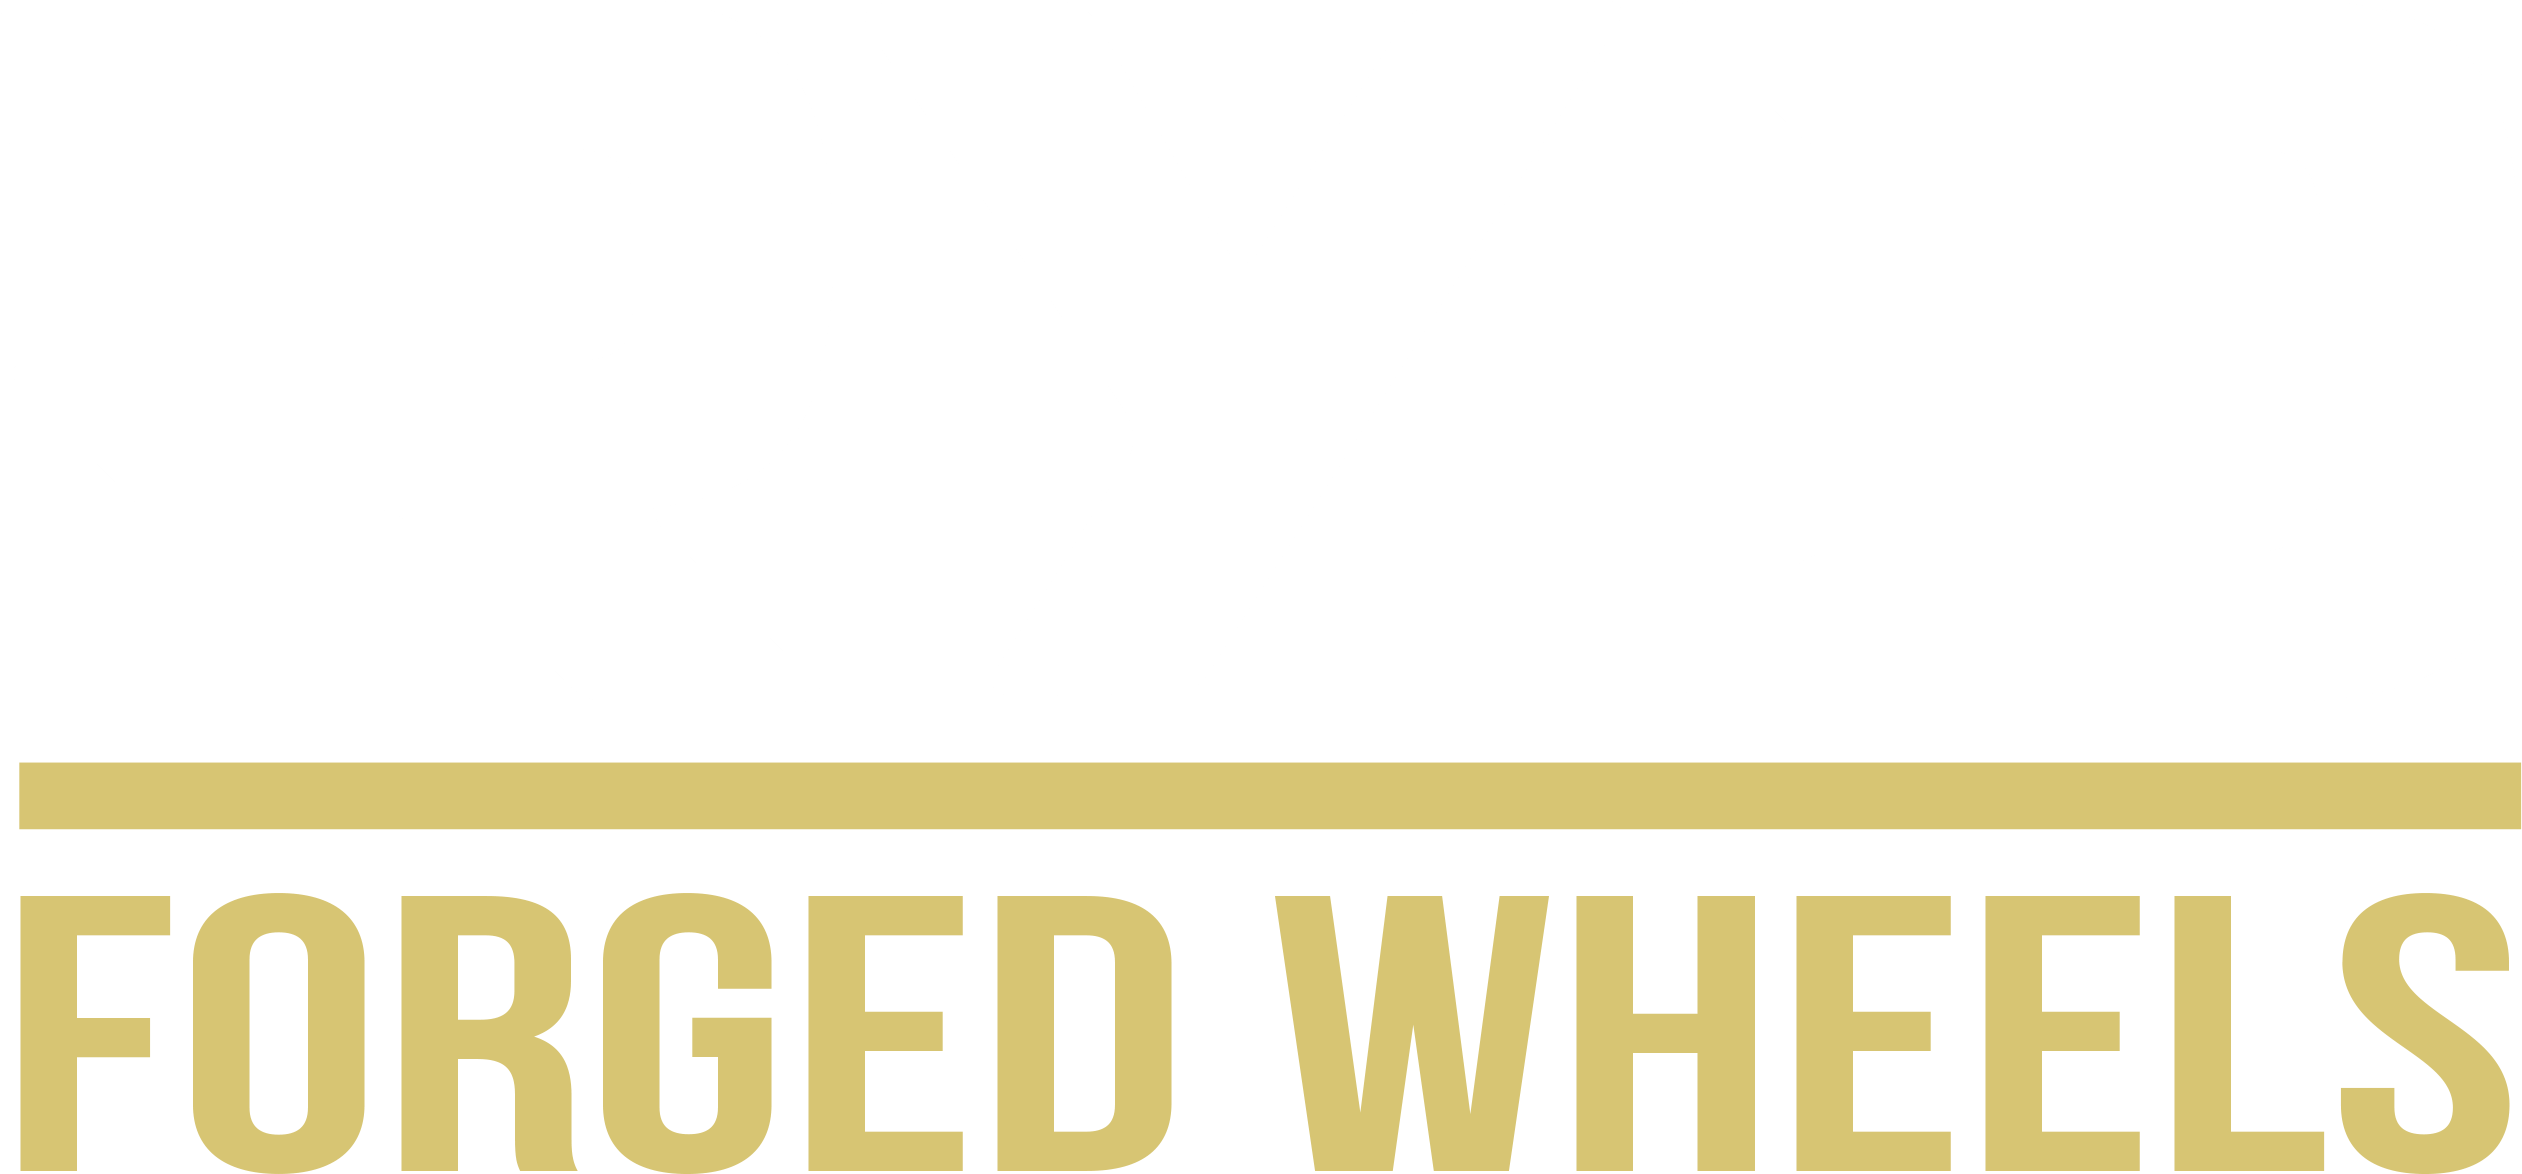 RYD logo gold